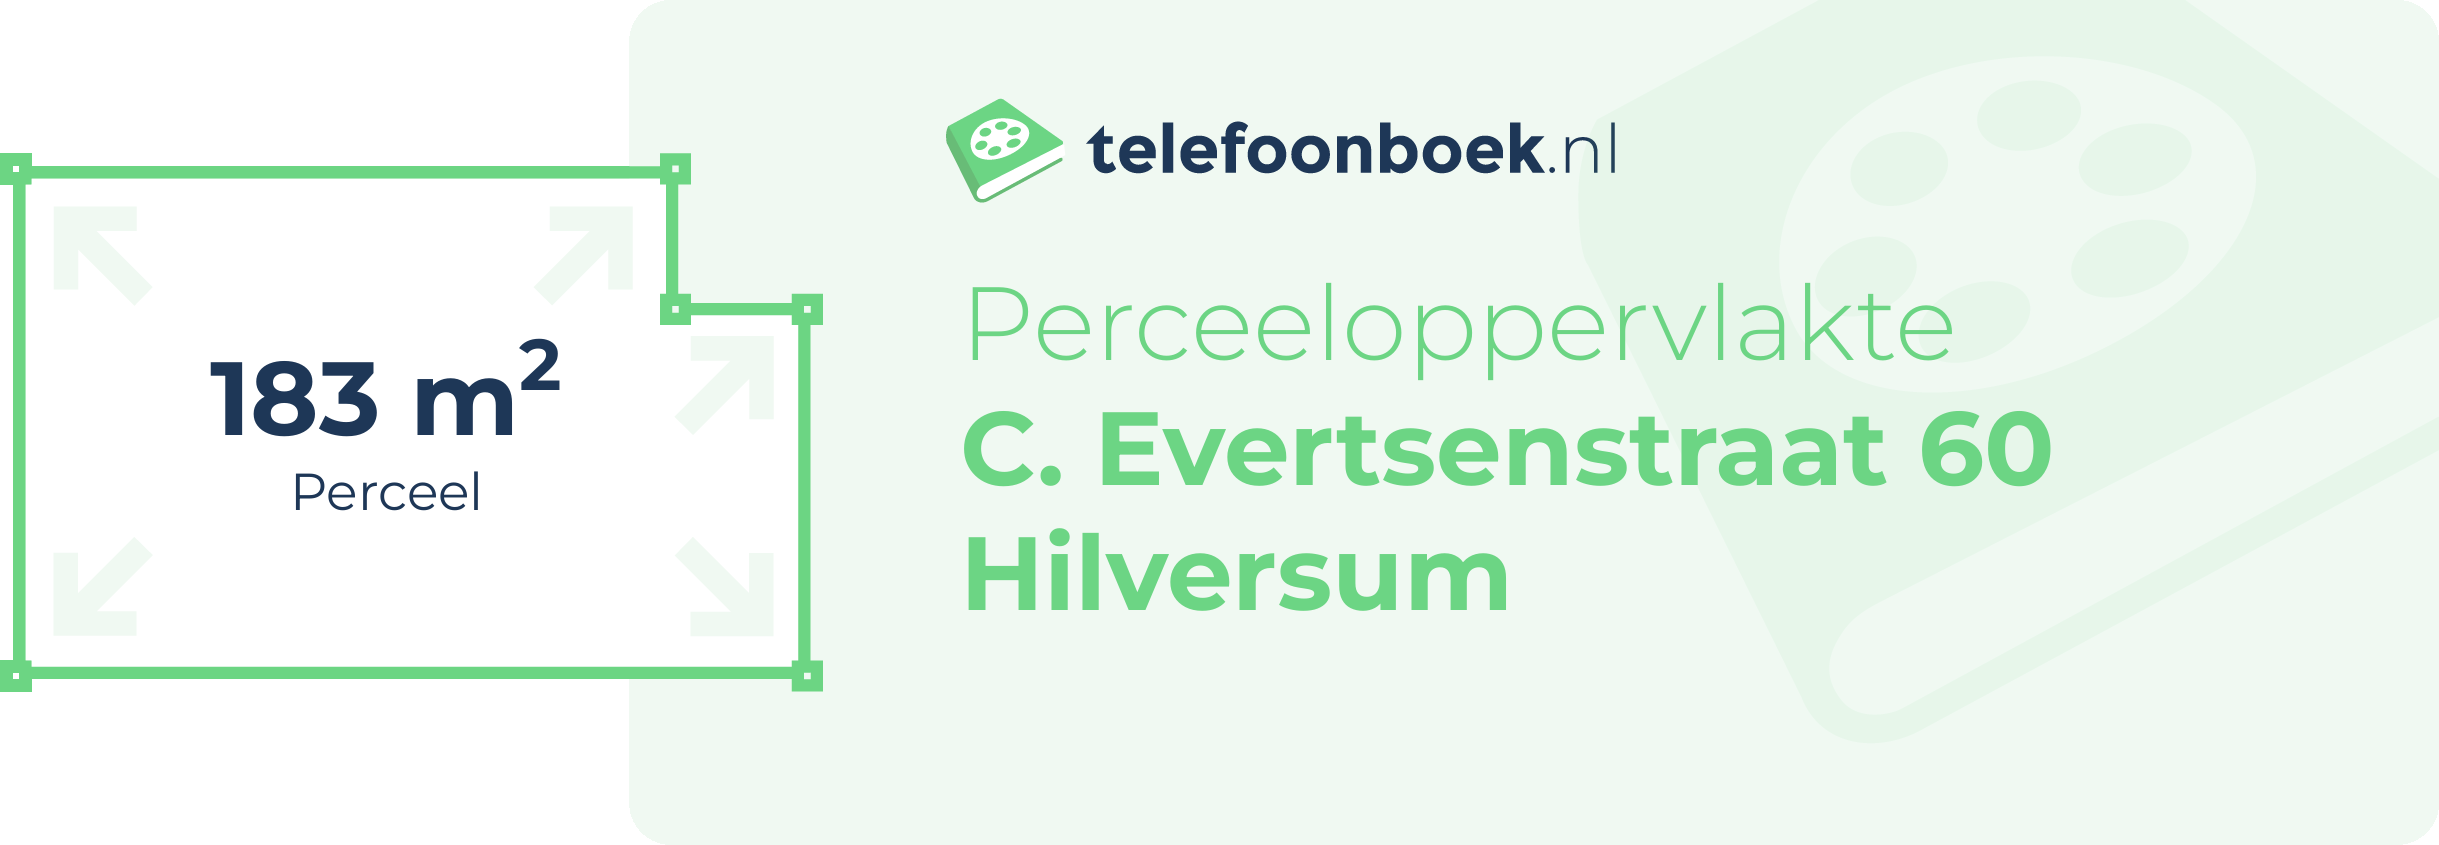 Perceeloppervlakte C. Evertsenstraat 60 Hilversum